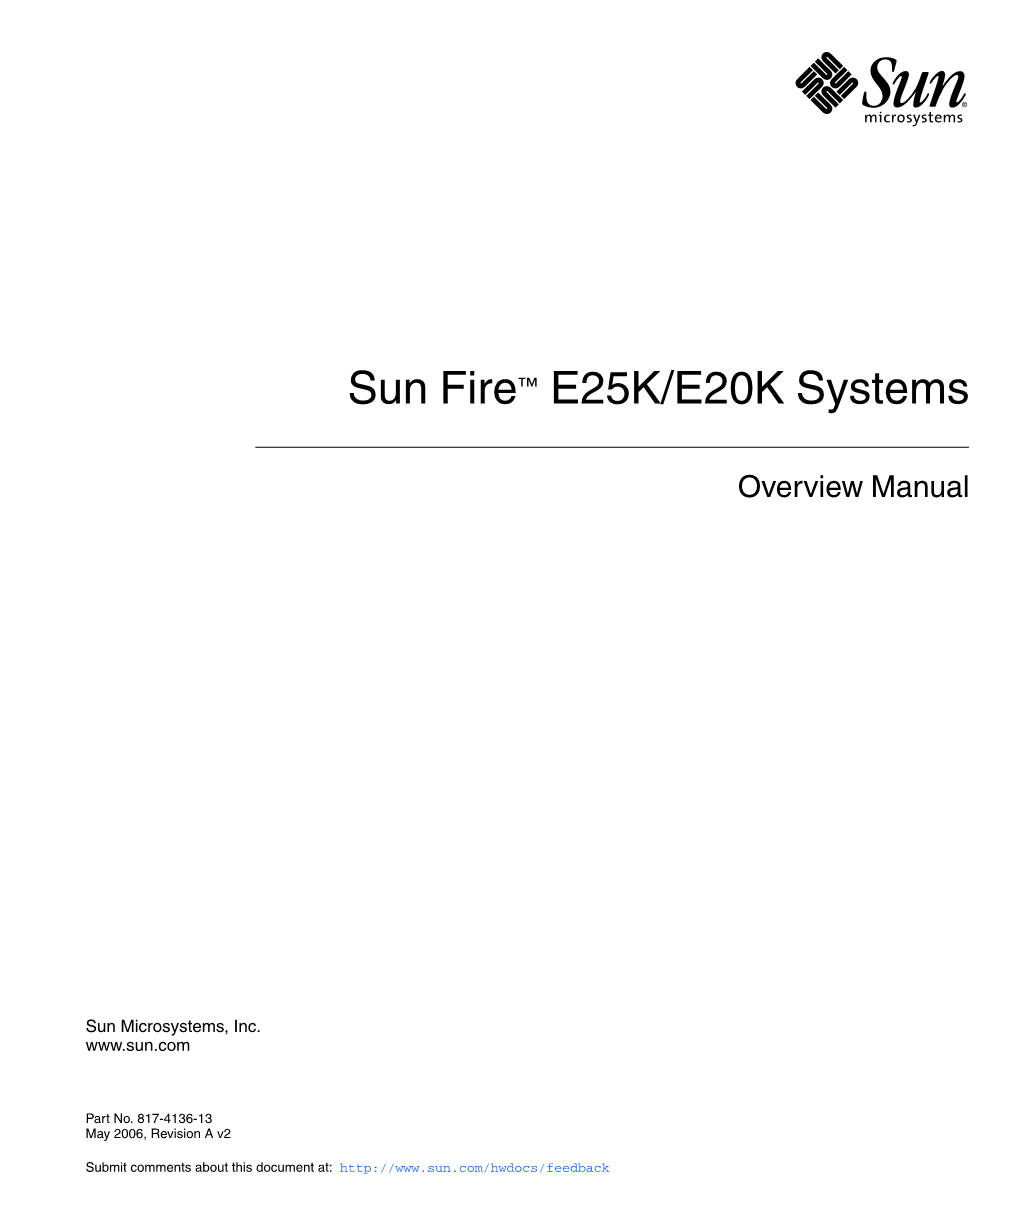 Sun Fire E25K/E20K Systems Overview